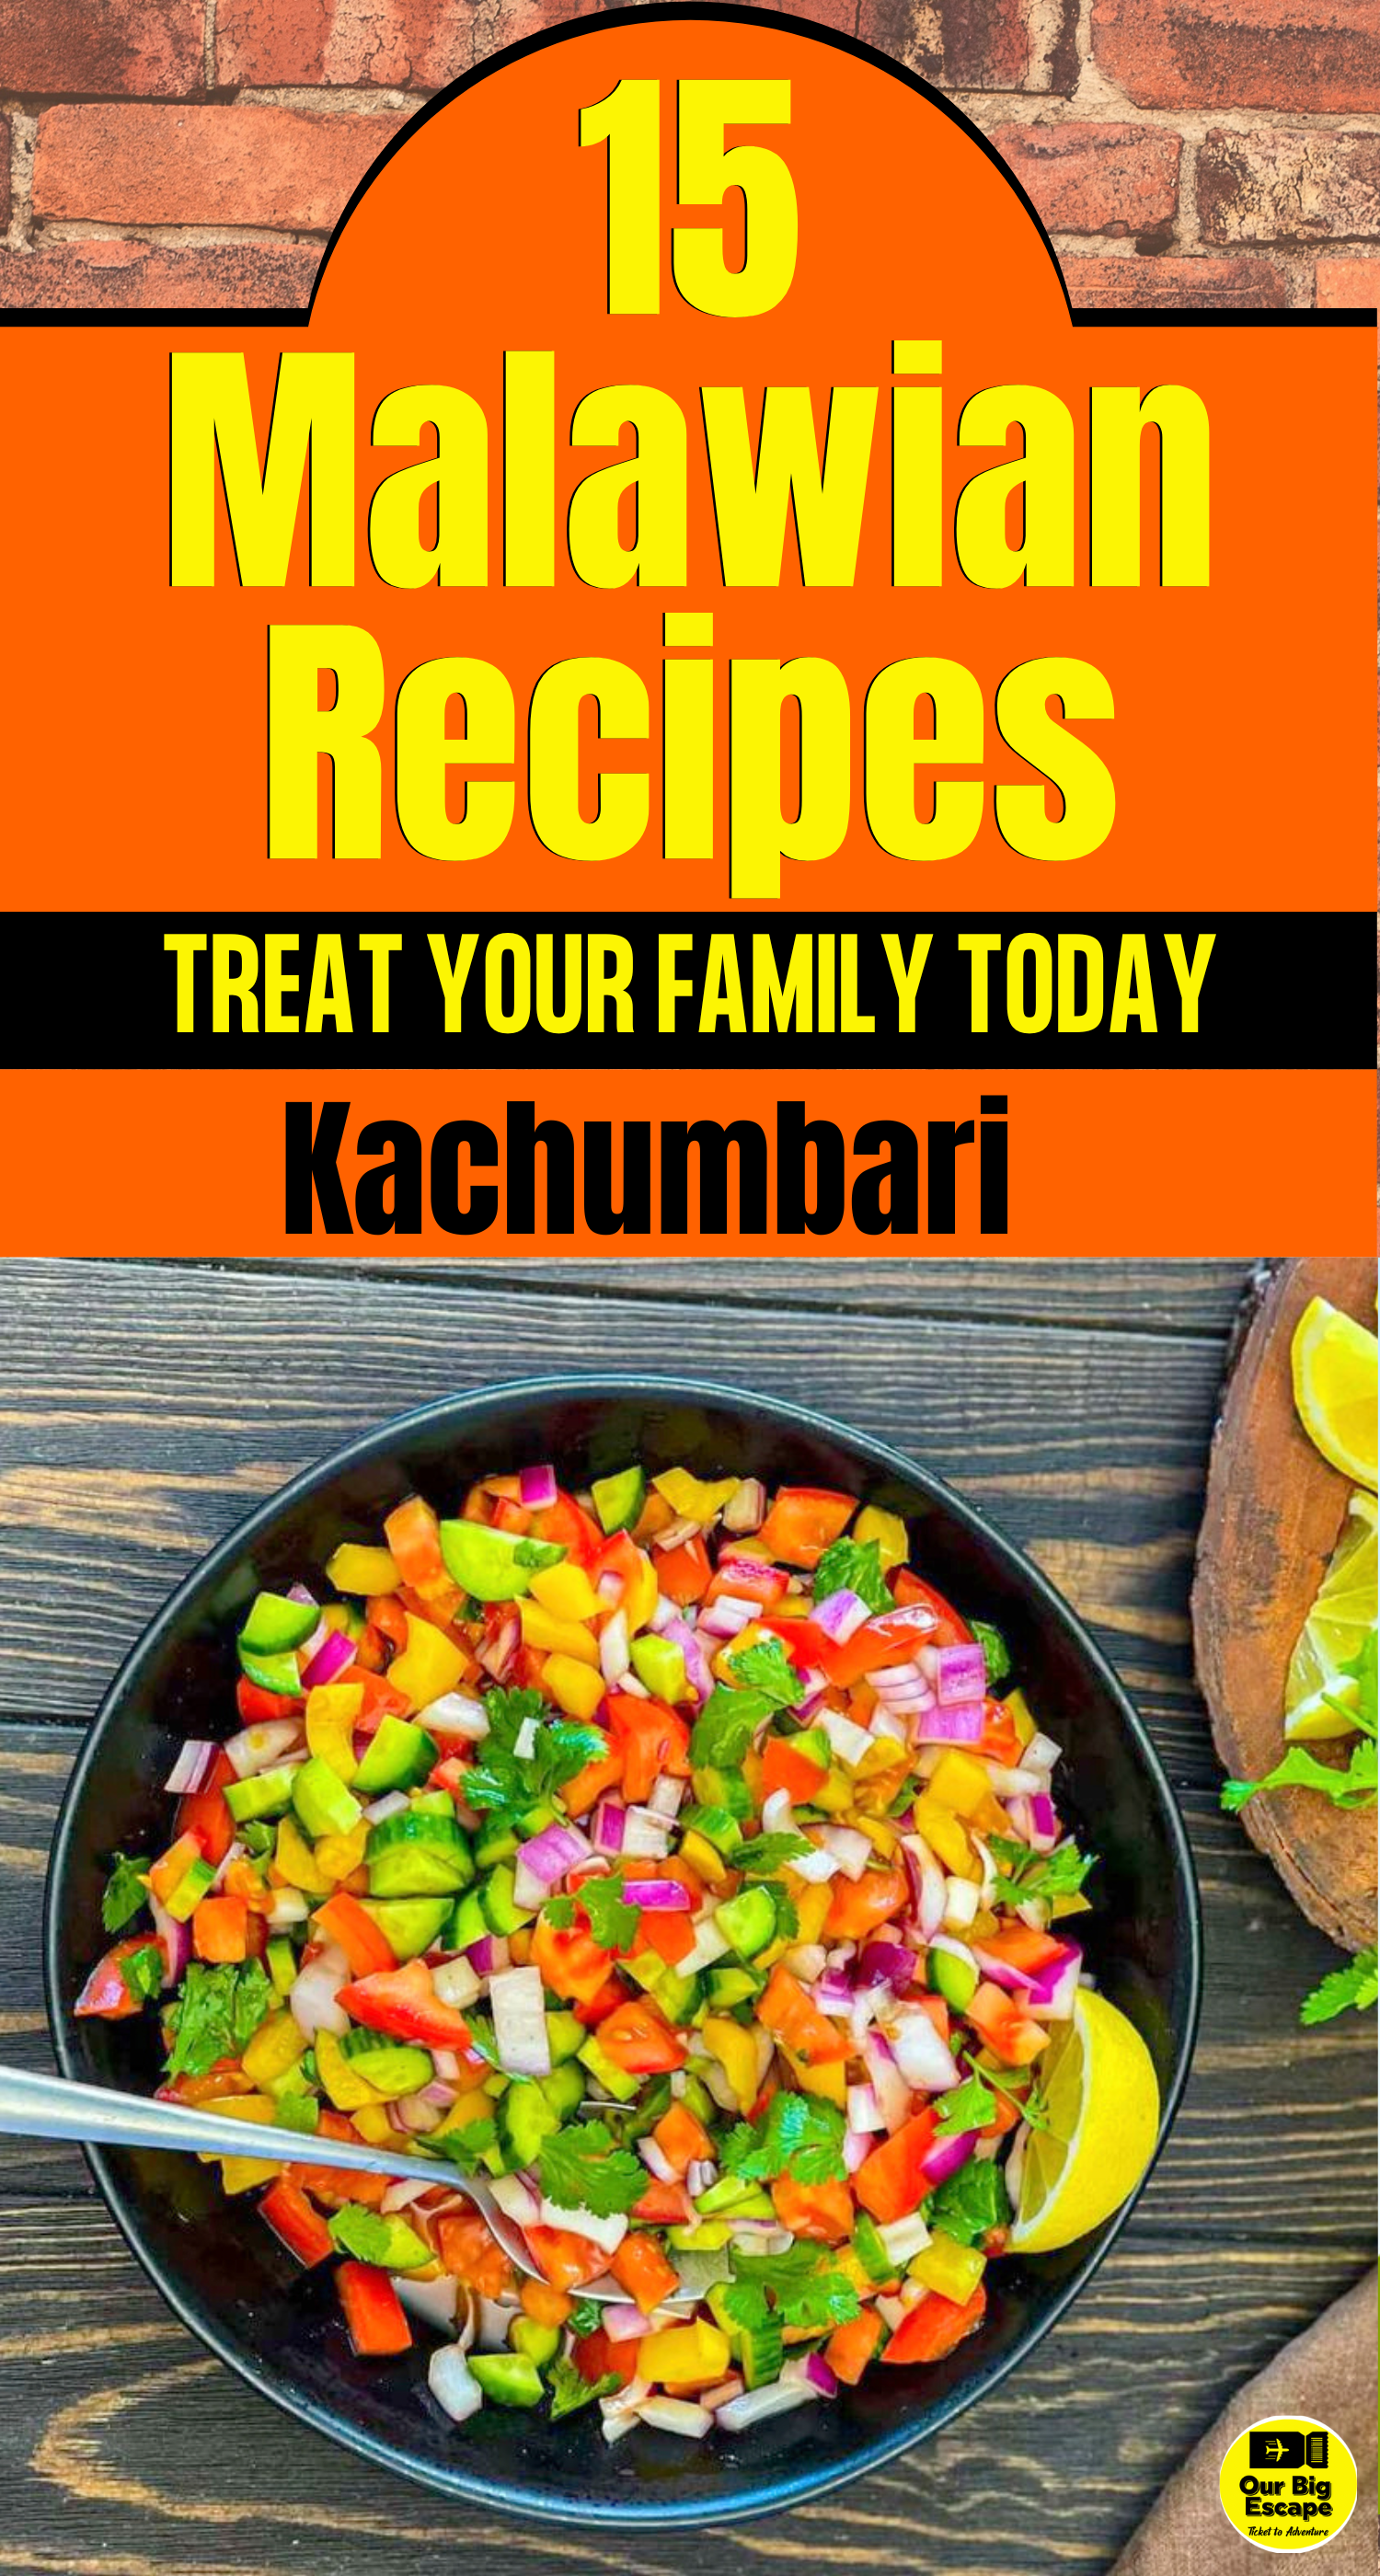 15 Malawian Recipes - Kachumbari - Treat Your Family Today